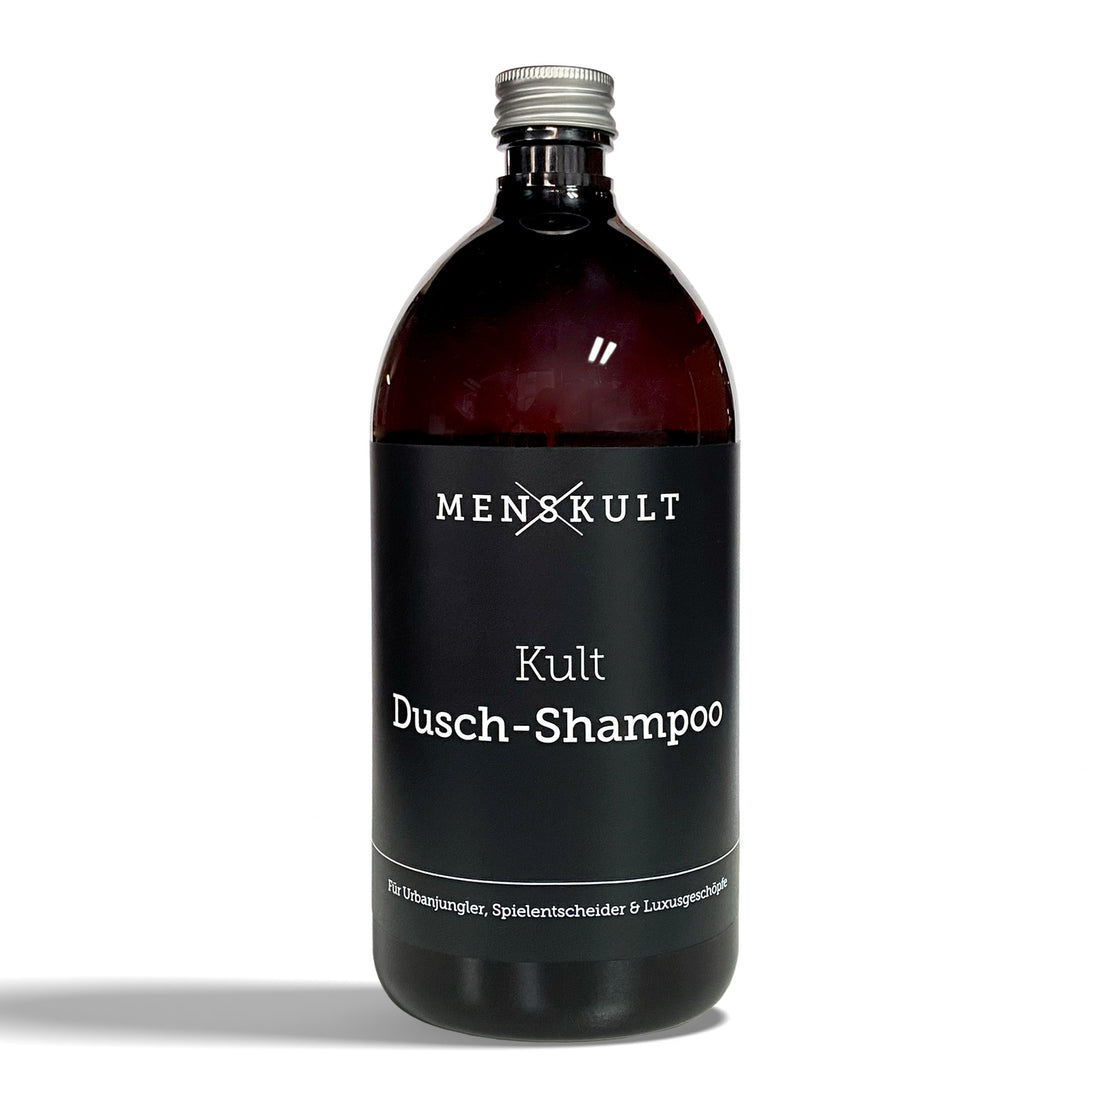 Dusch-Shampoo